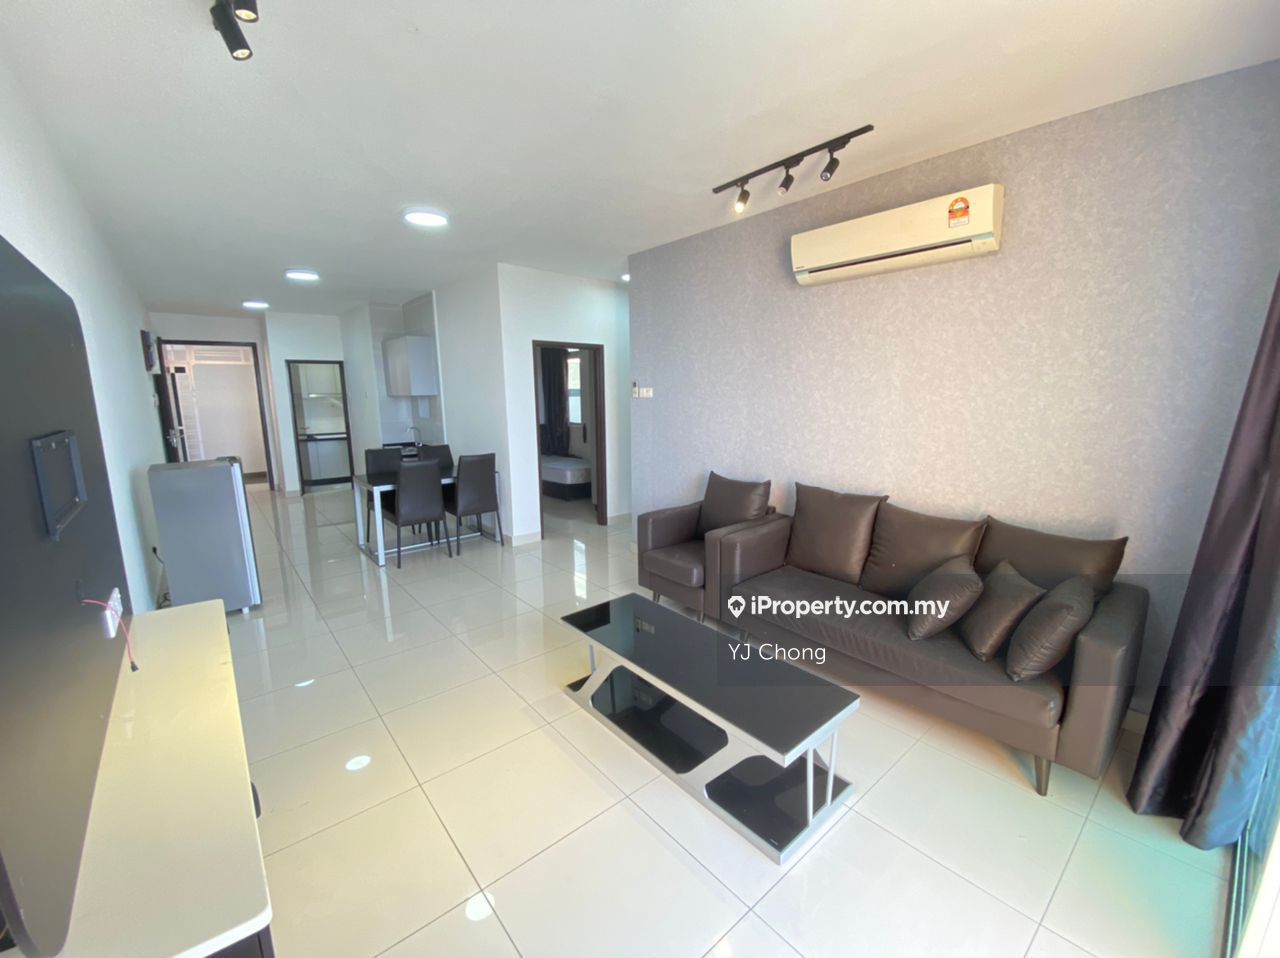 KSL Residence @ Daya Condominium 3 bedrooms for rent in Johor Bahru ...